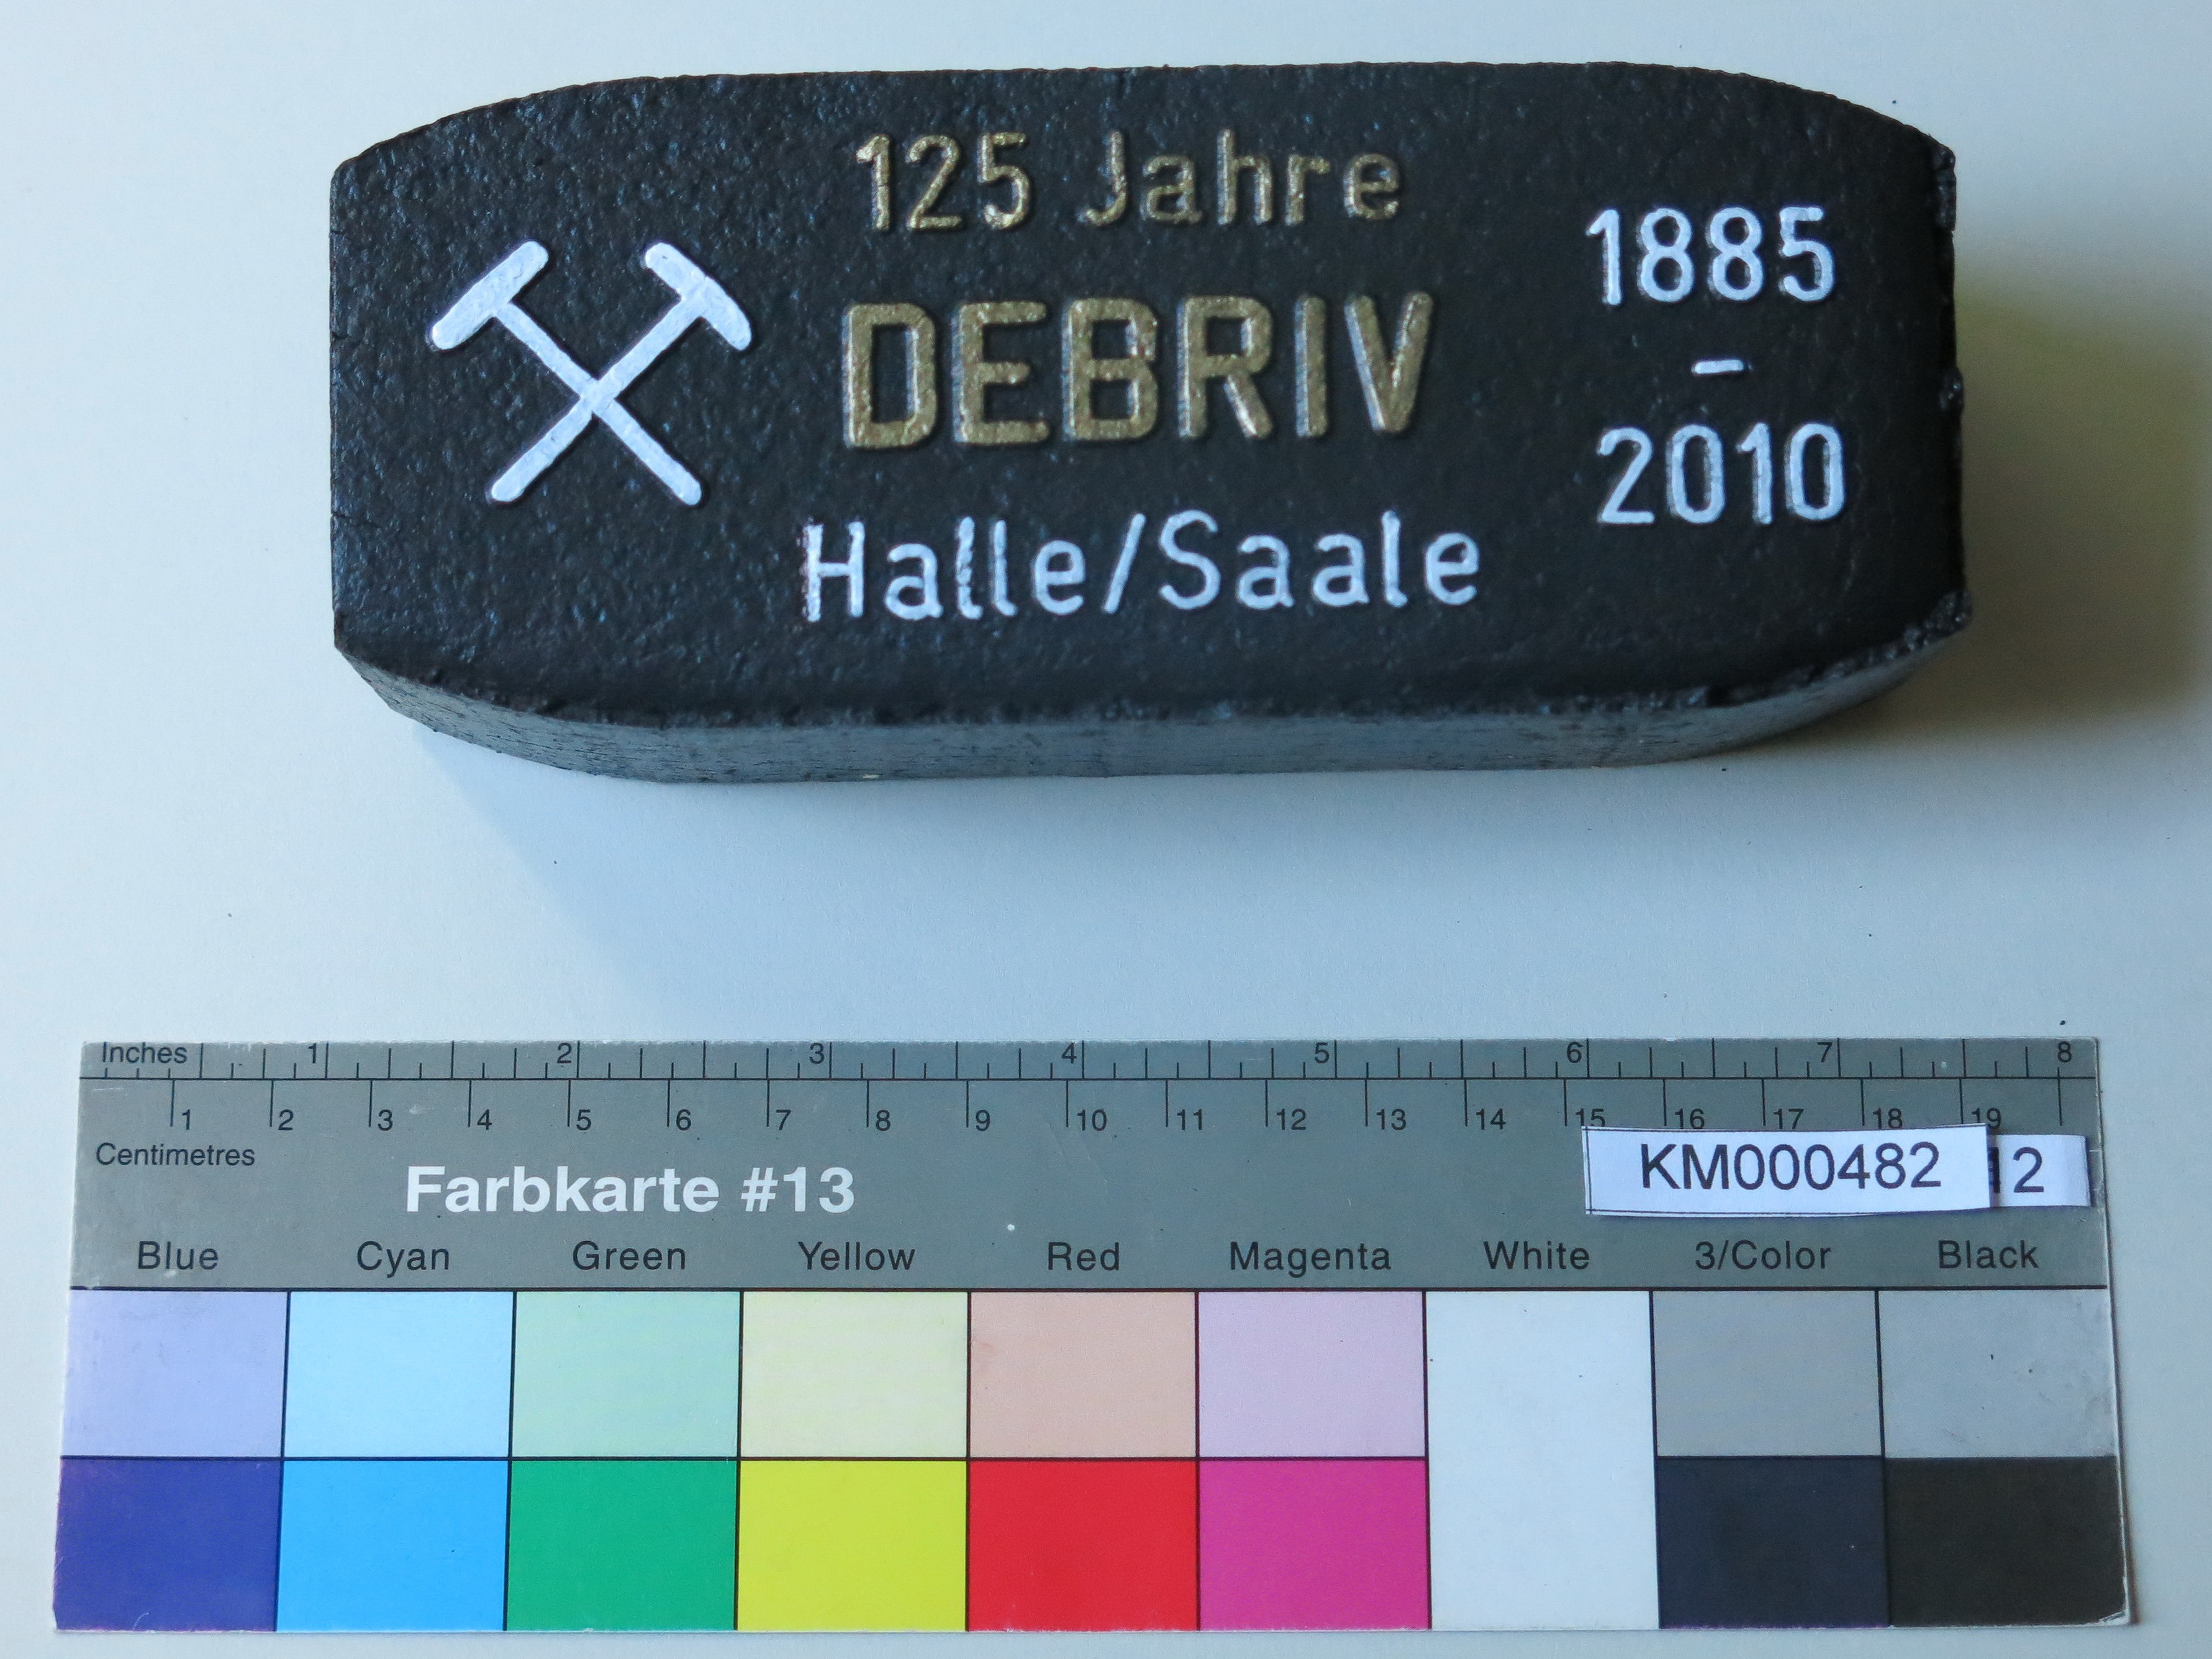 Zierbrikett "125 Jahre DEBRIV Halle/Saale 1885-2010" (Energiefabrik Knappenrode CC BY-SA)